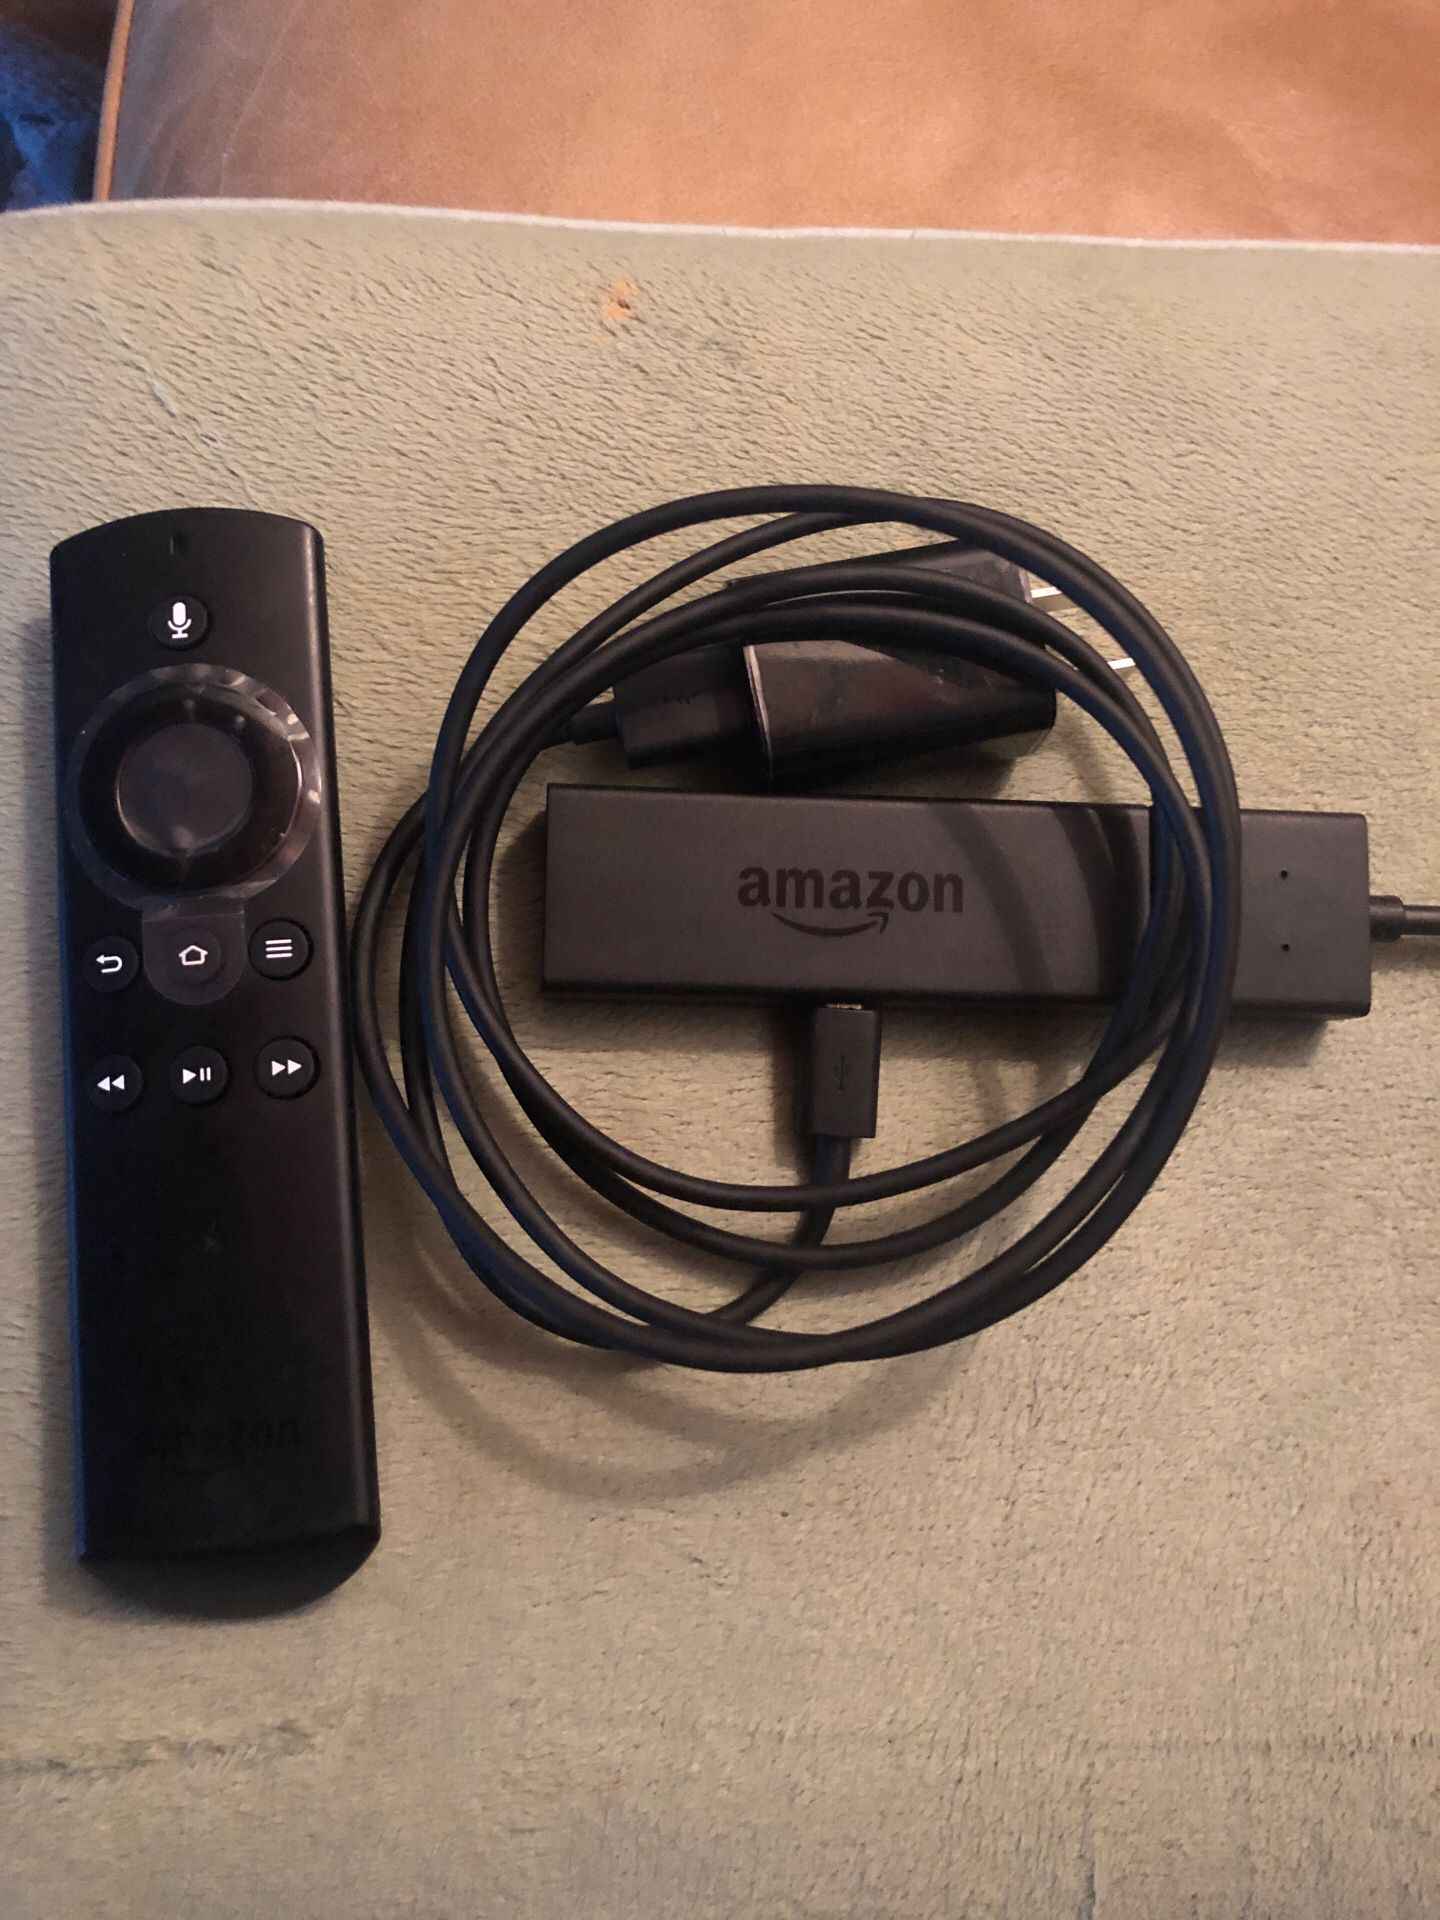 Unboxed Amazon Fire Tv w/voice control Remote